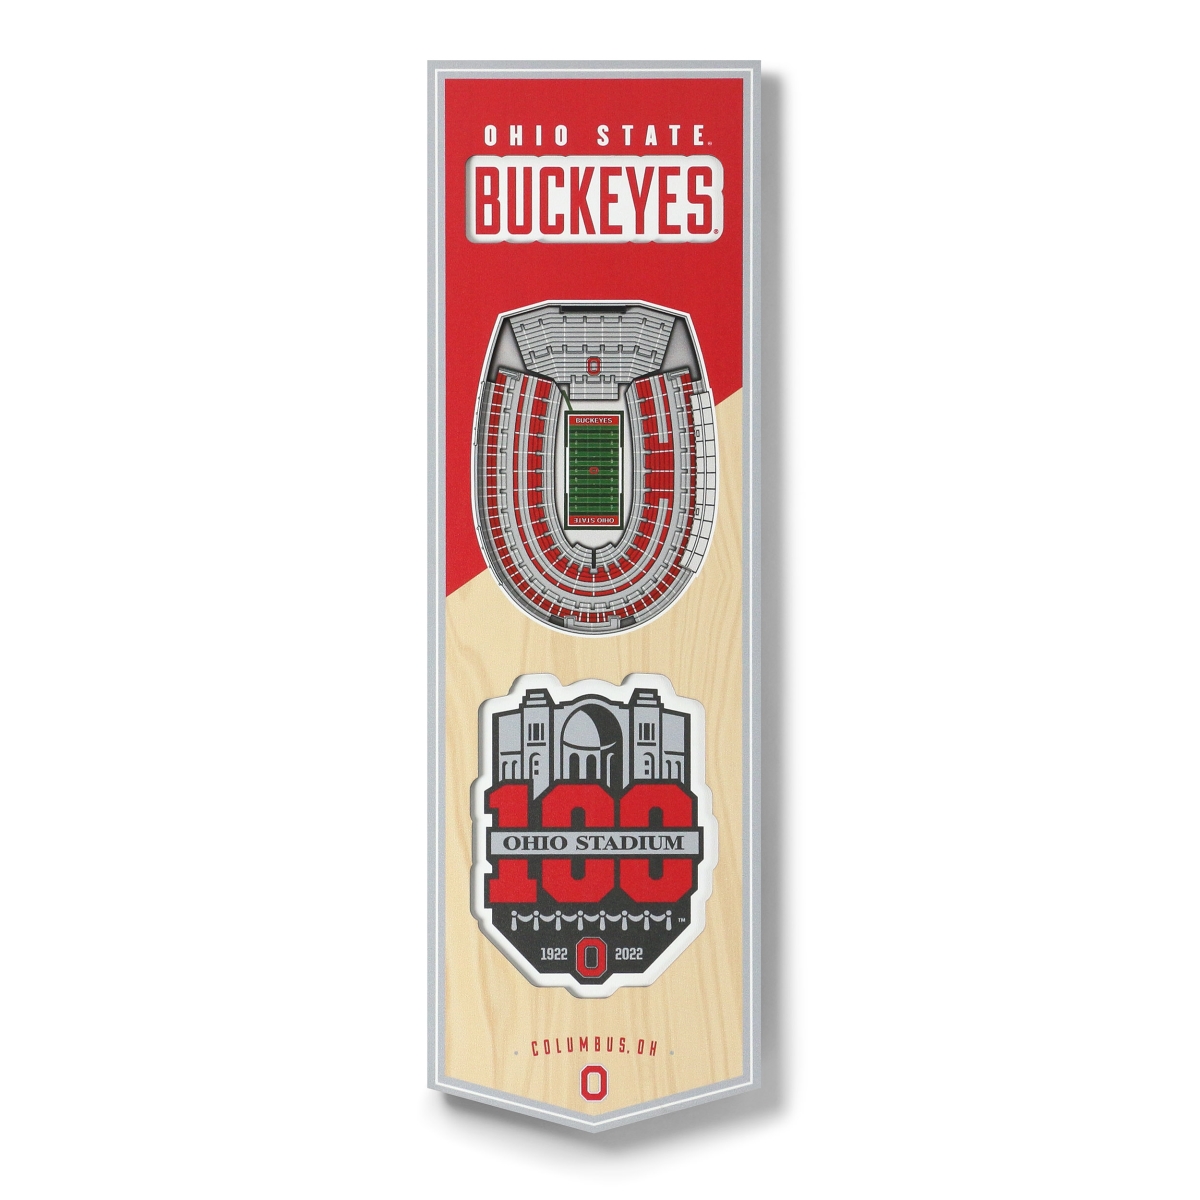 Souvenirs 6 x 19 in. NCAA Ohio State Buckeyes 100th 3D Stadium Banner - Ohio Stadium